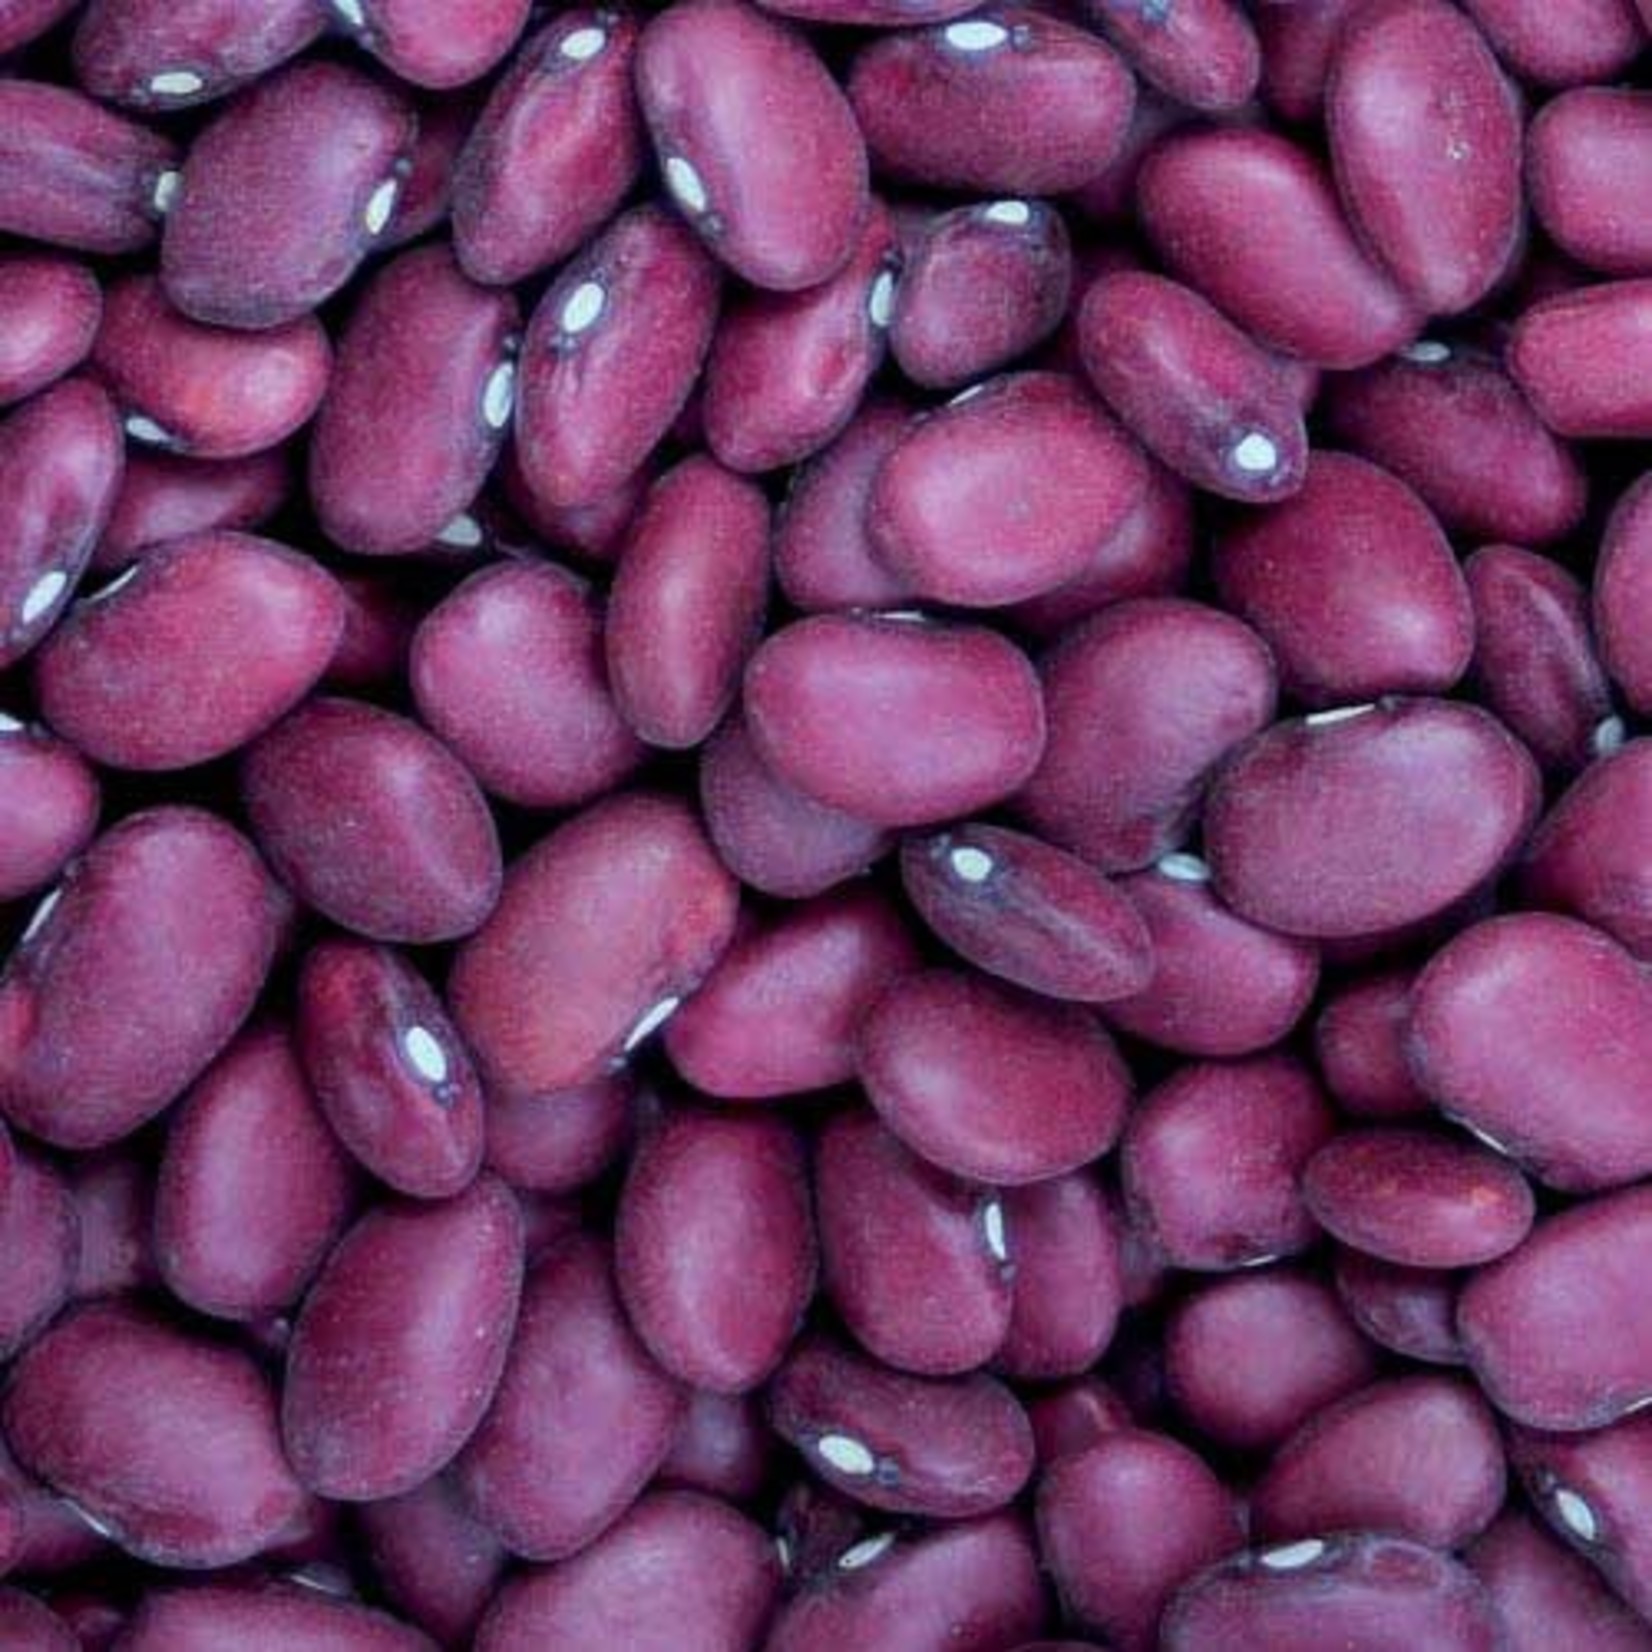 Seed Savers Hidatsa Red Bean